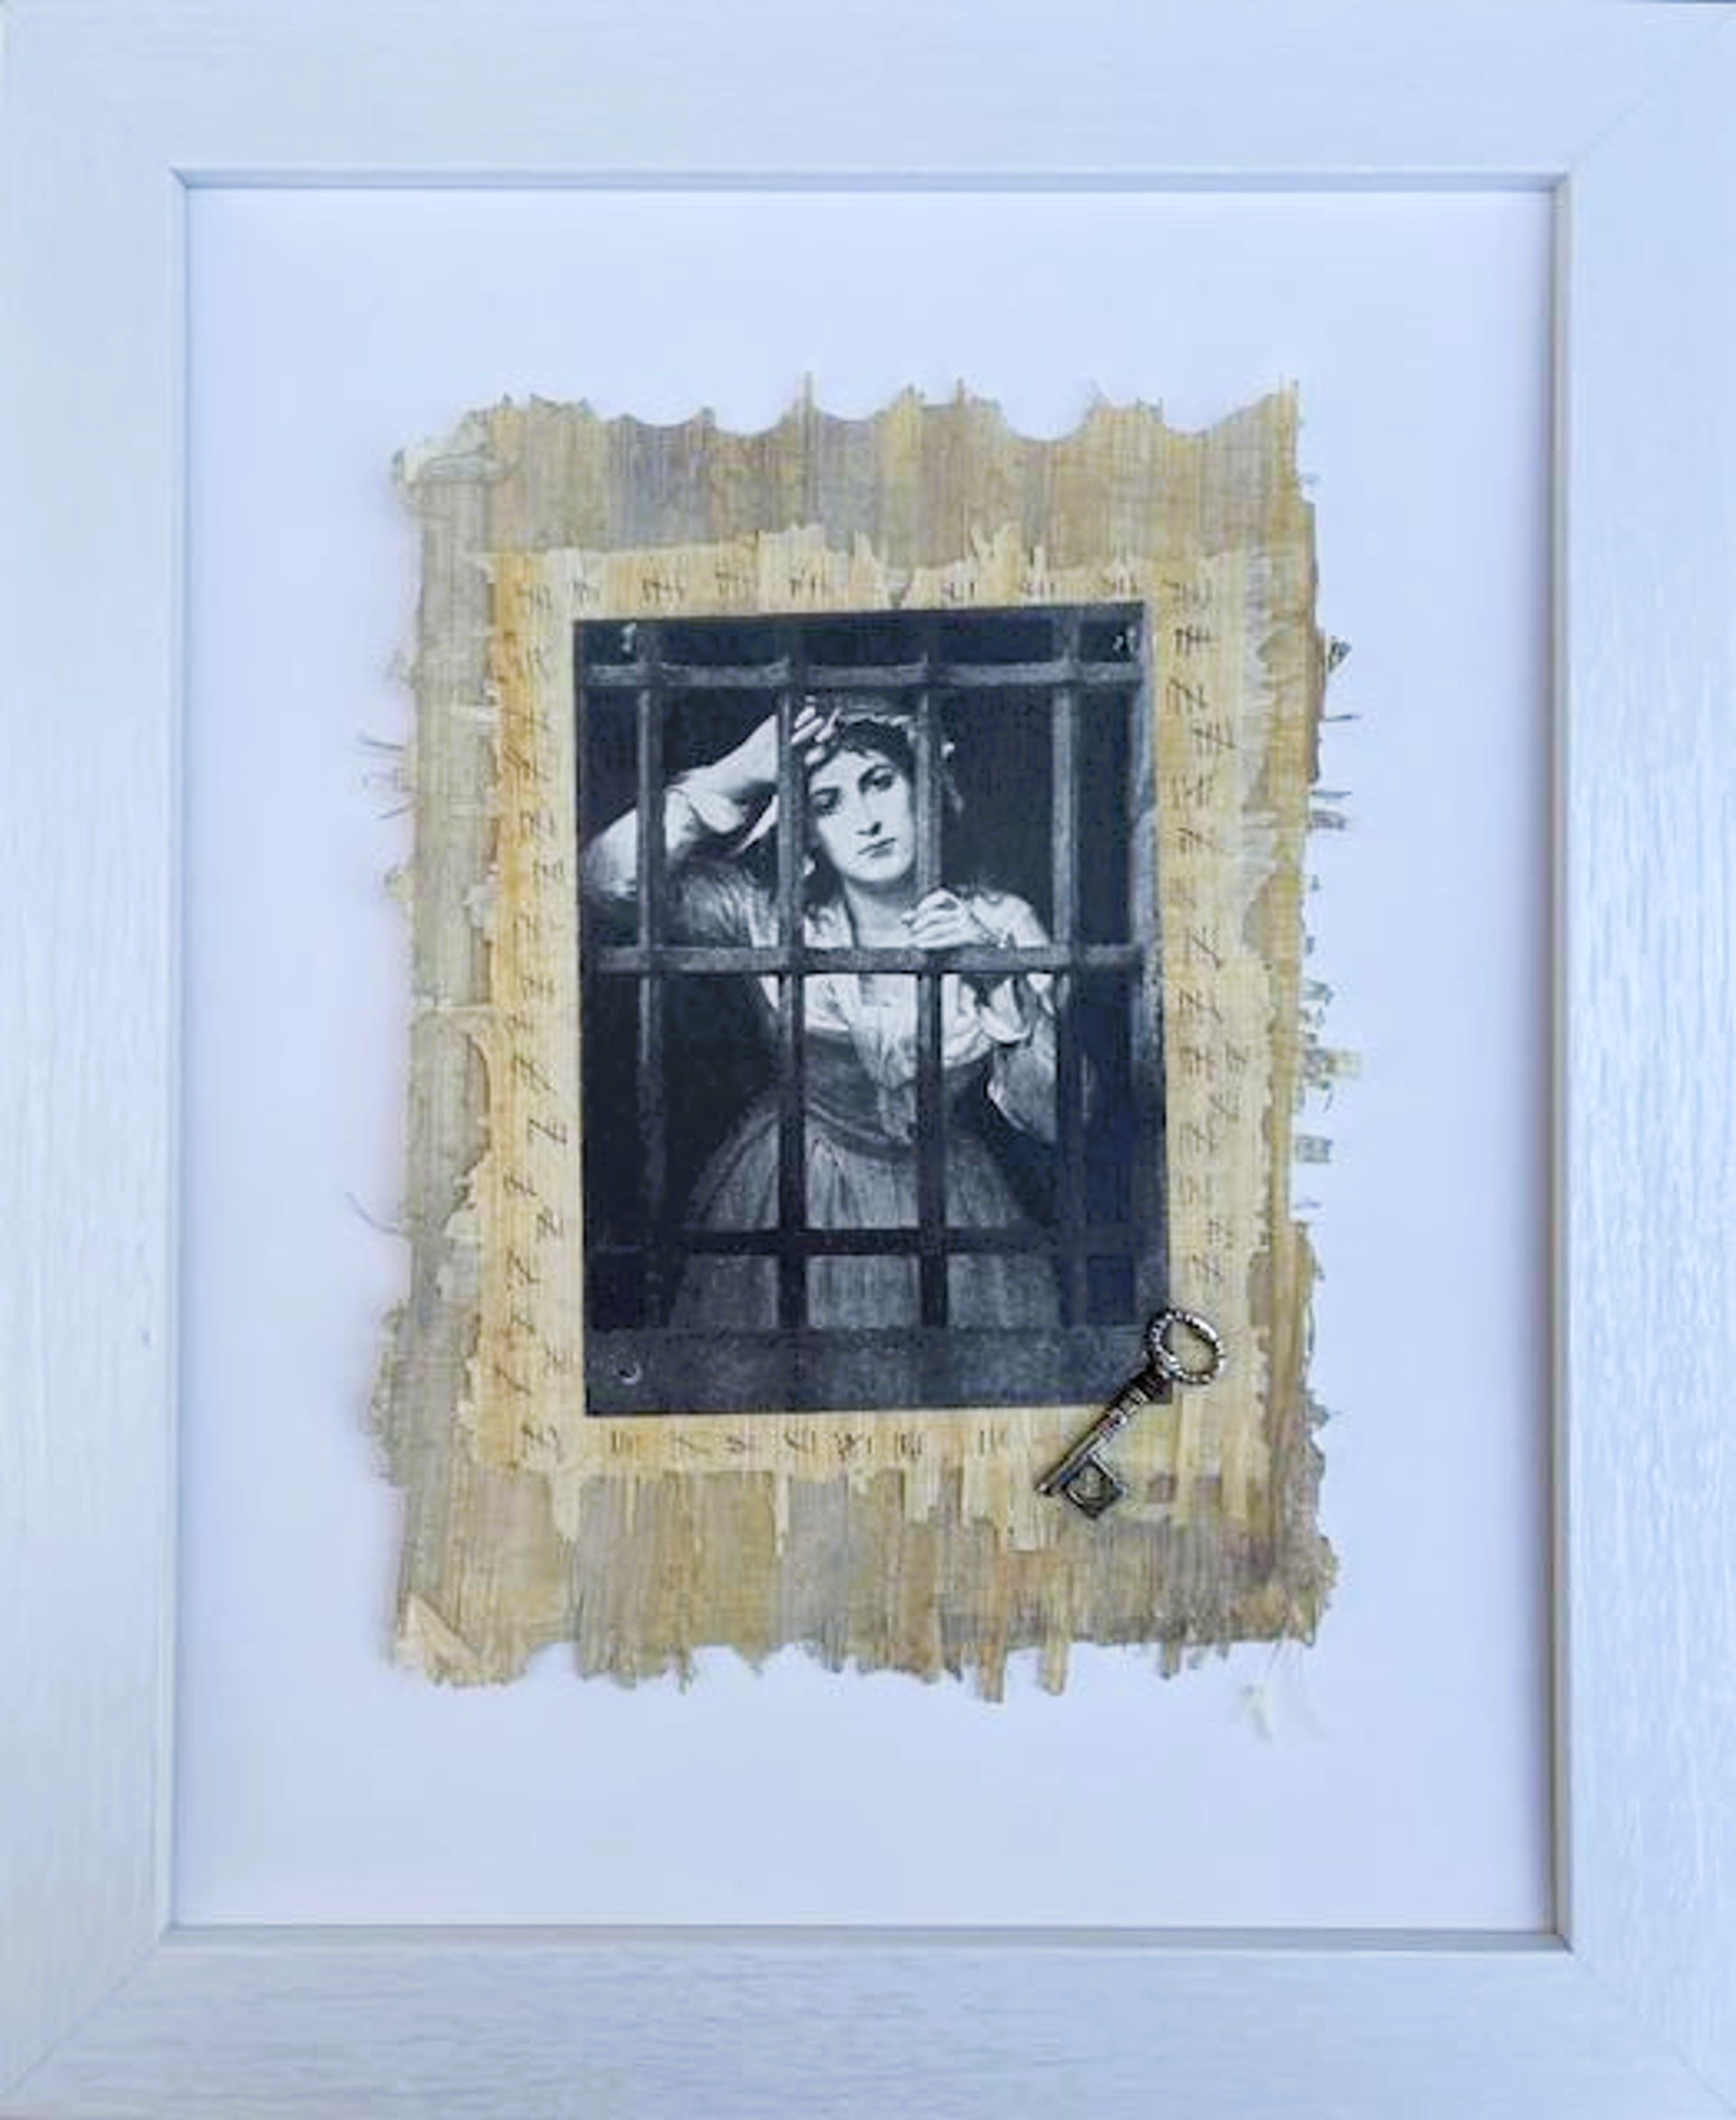 Imprisoned by Melody Lafferty